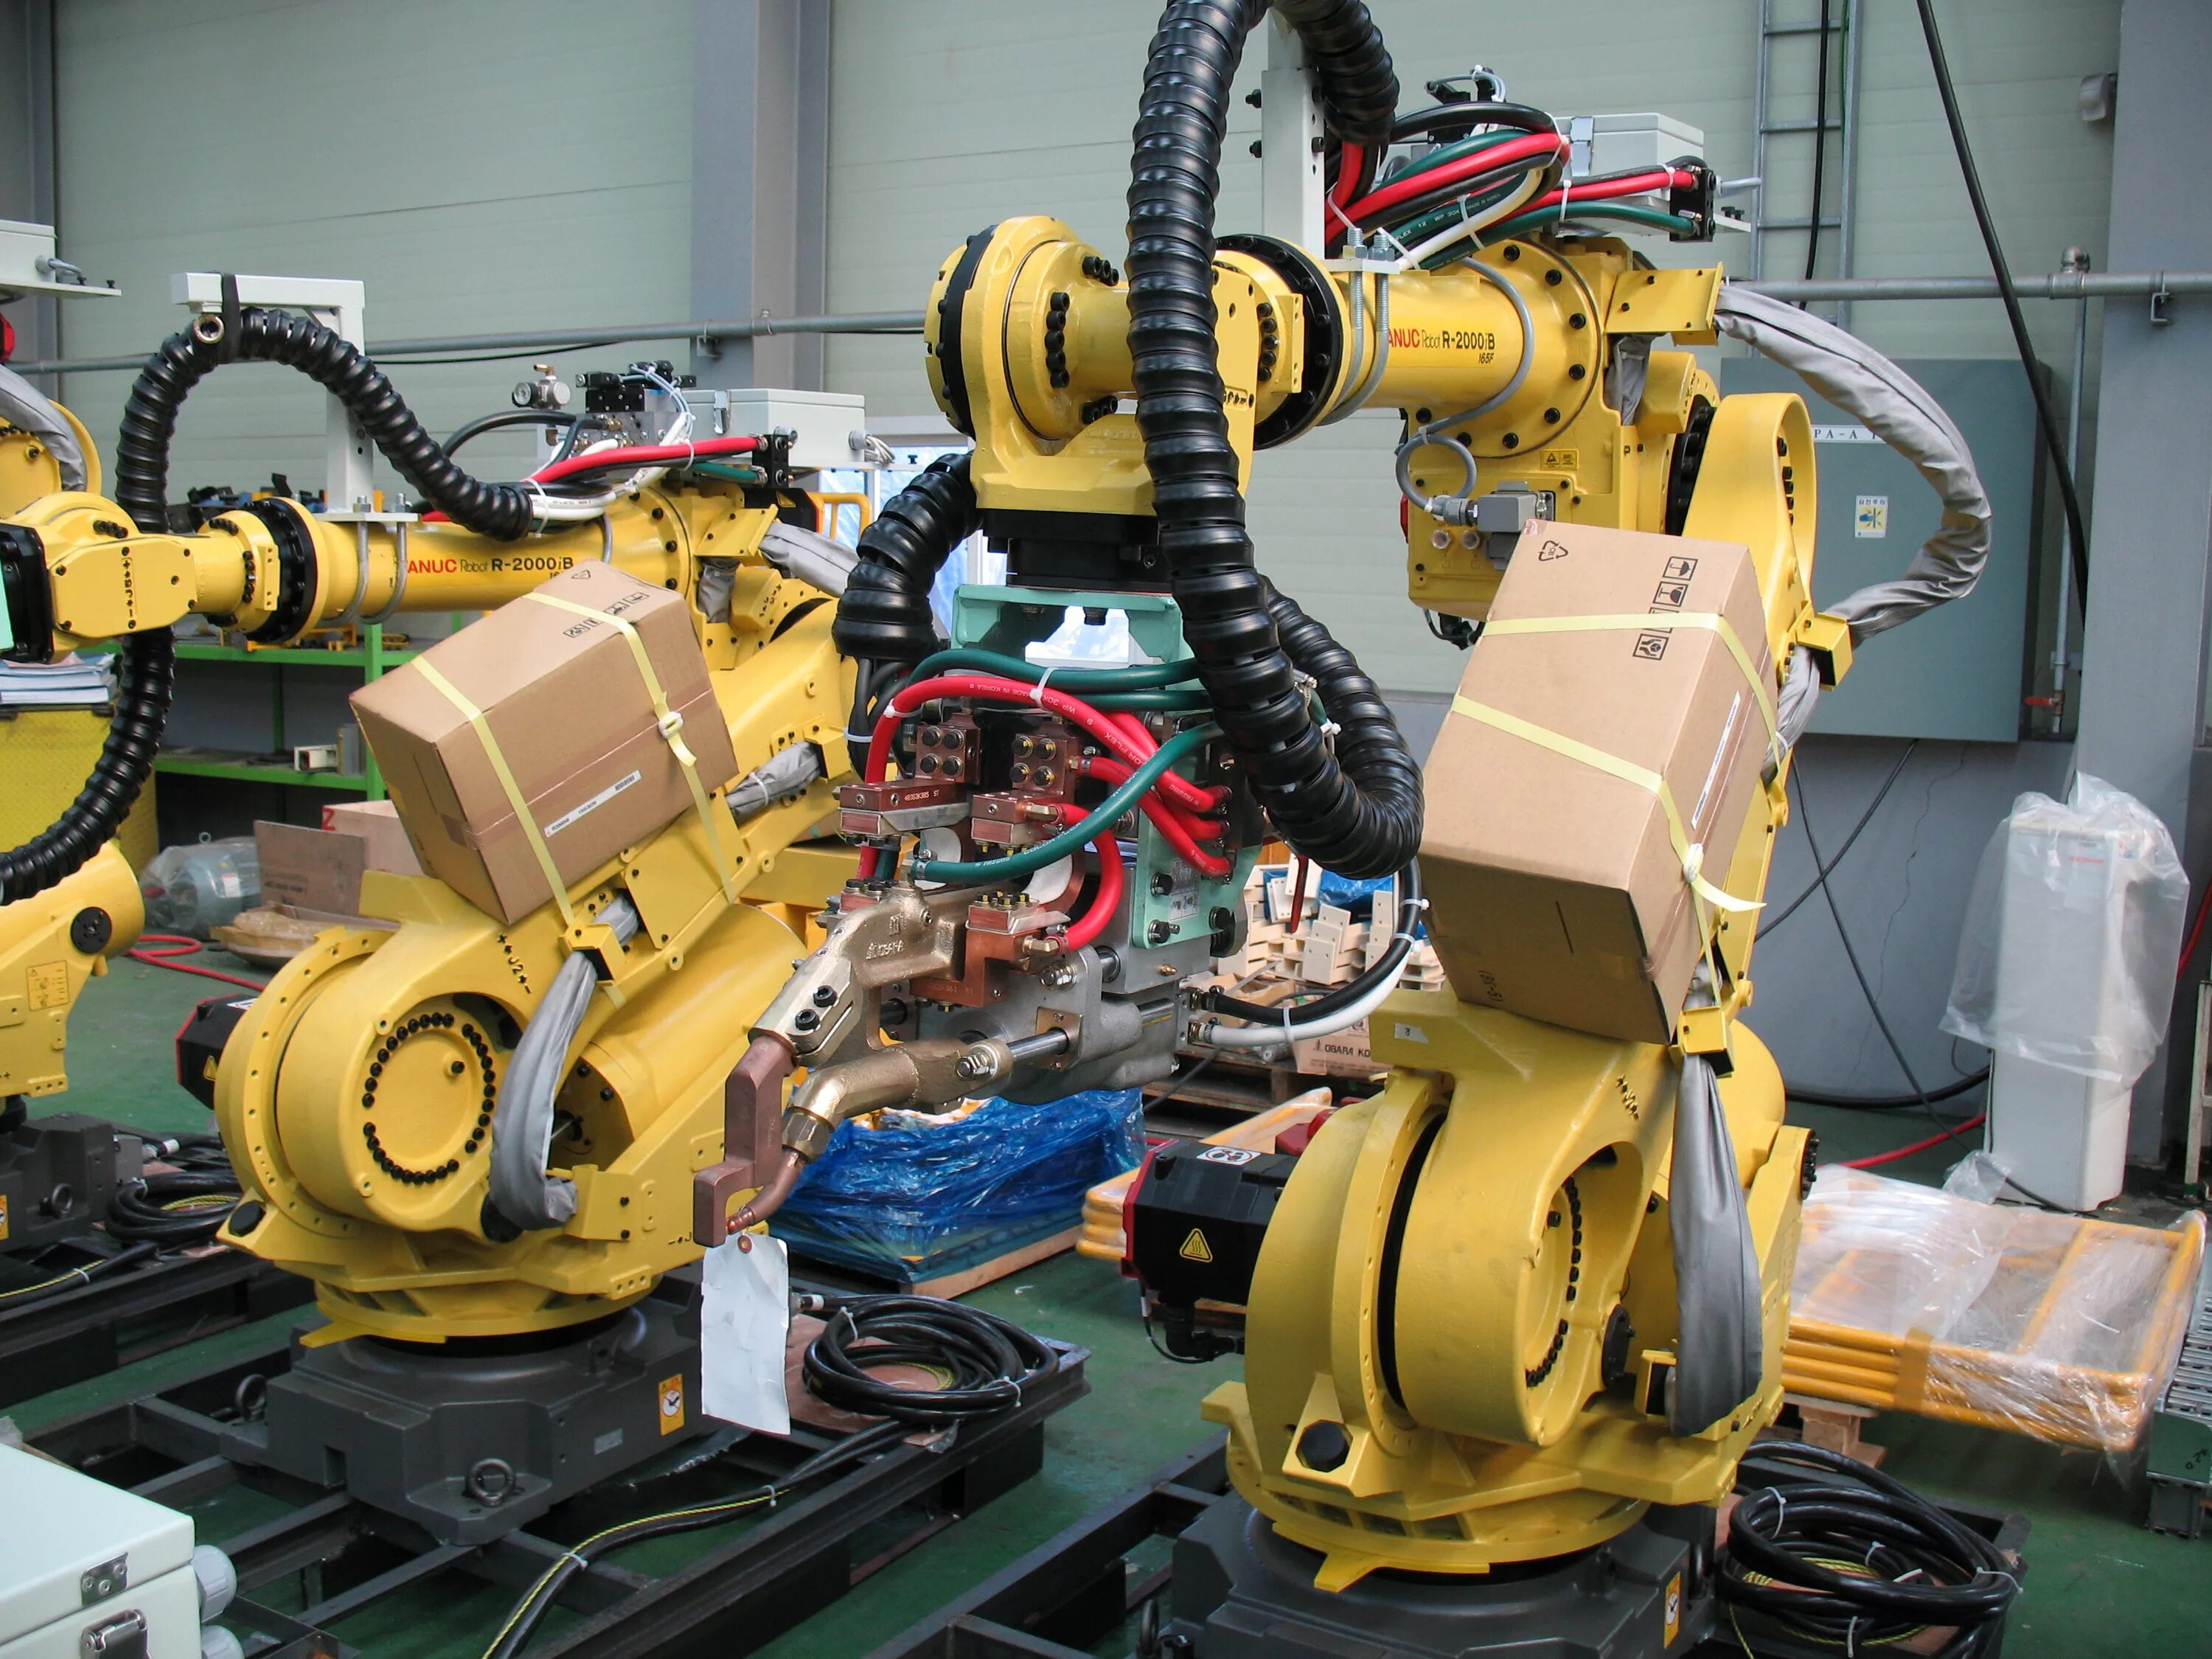 Fanuc robot. Fanuc r-2000ib Robots. Робот Fanuc r-2000ib/210fs. Fanuc r-2000ib/210fs. Промышленный робот Fanuc r-2000ib/170cf.